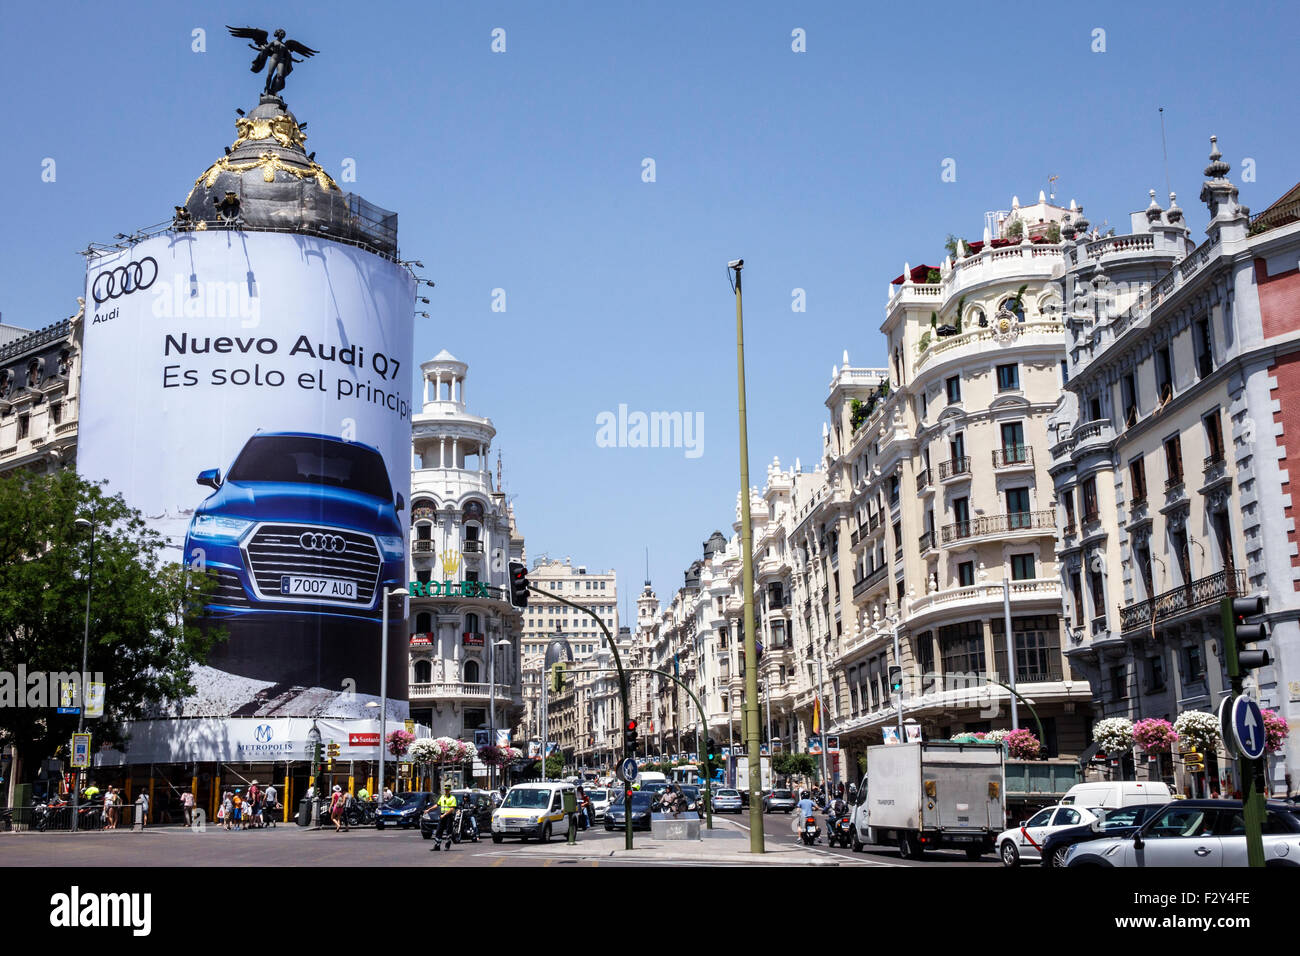 Madrid Spain,Hispanic Centro,Calle de Alcala,Gran Via,Metropolis building,exterior,ad Audi,billboard,traffic,Spain150701039 Stock Photo